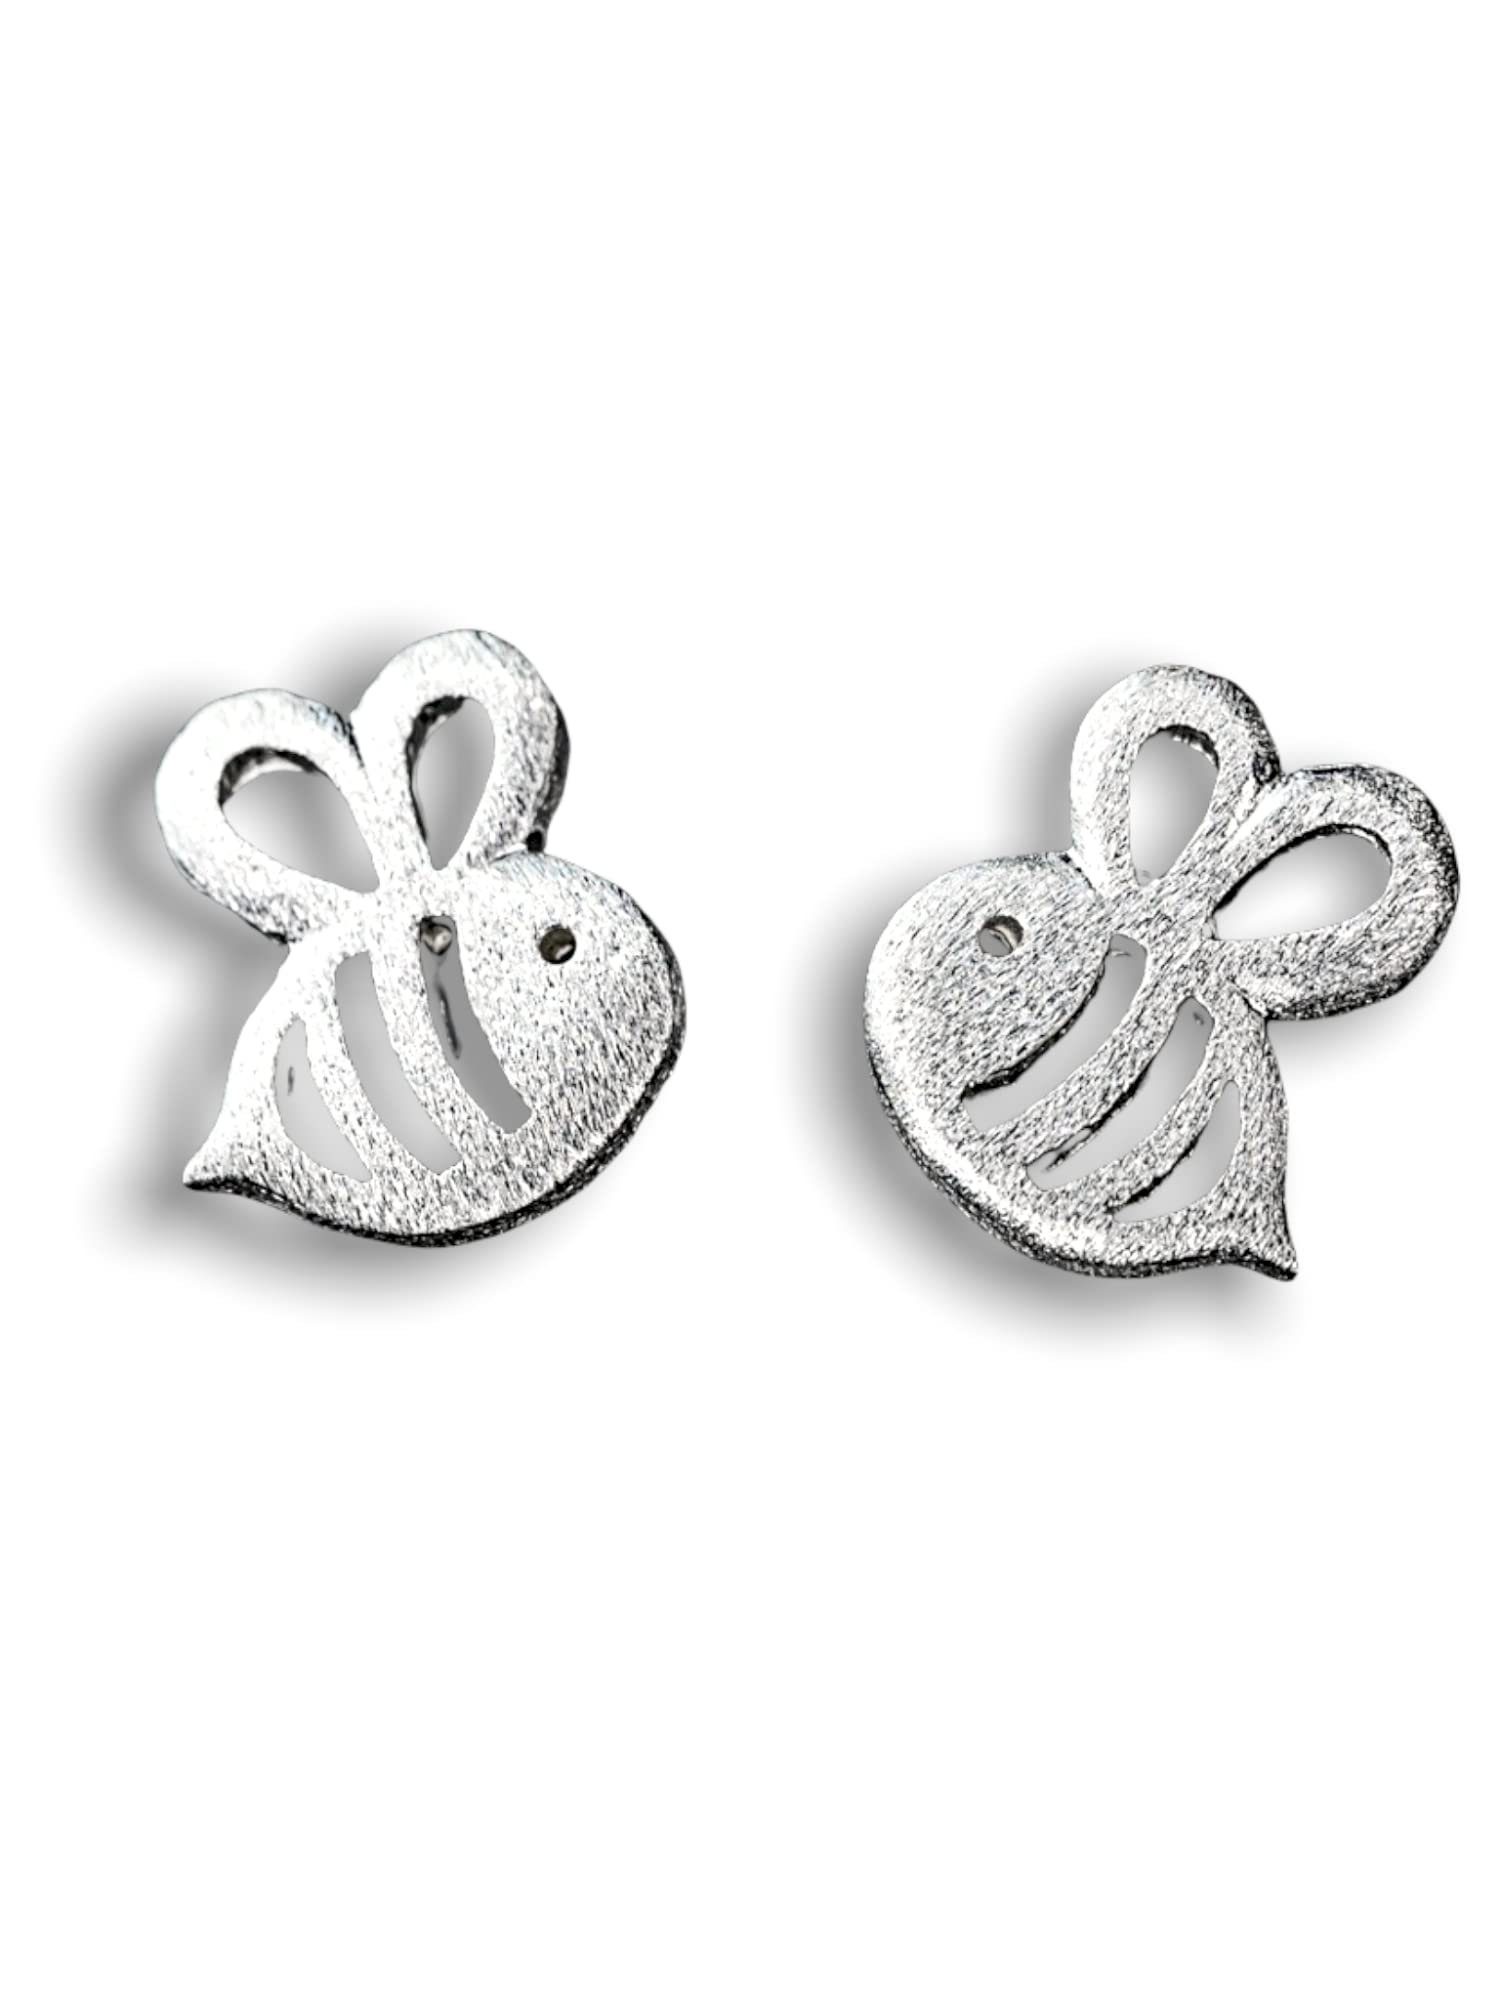 POCHUMIDUU Paar Ohrhänger S925 Silber Biene Form Mode Frauen Ohrringe, Silberschmuck für Frauen aus 925er Sterlingsilber